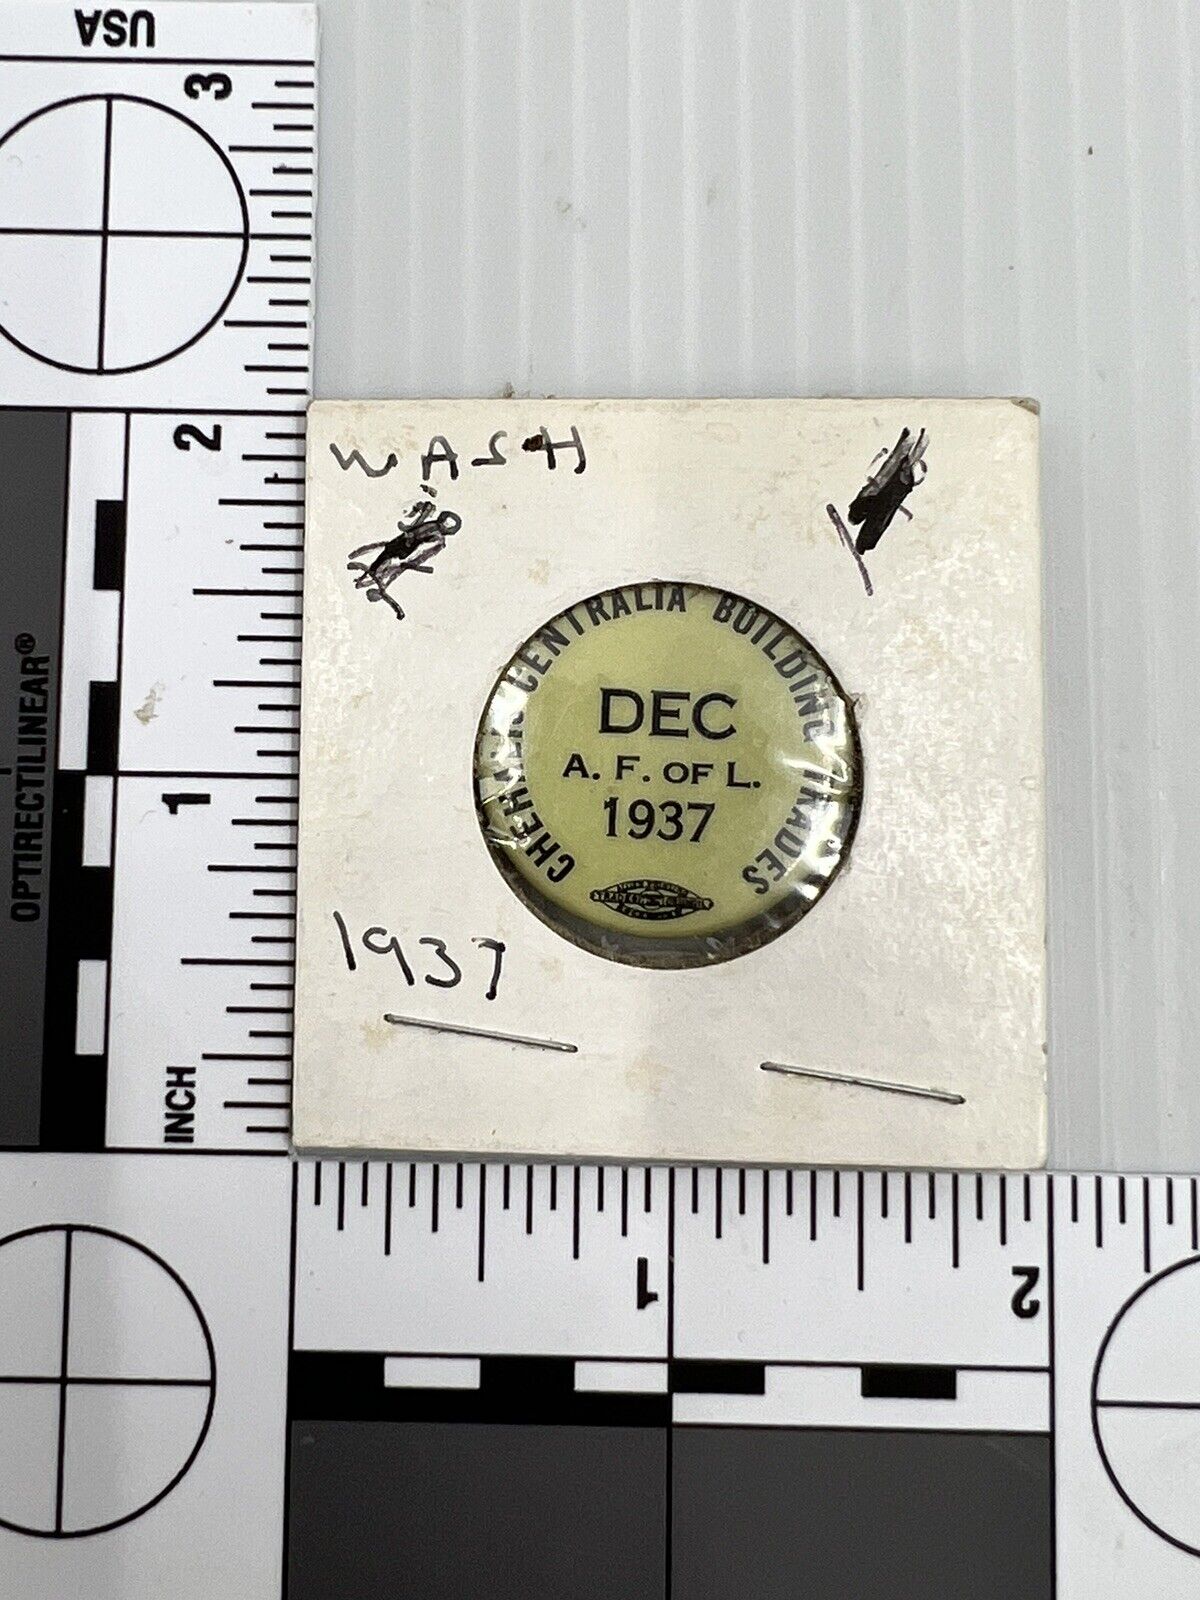 1937 AF of L Chehalis Centralia Building Trades Pin Pinback Button Vintage Labor